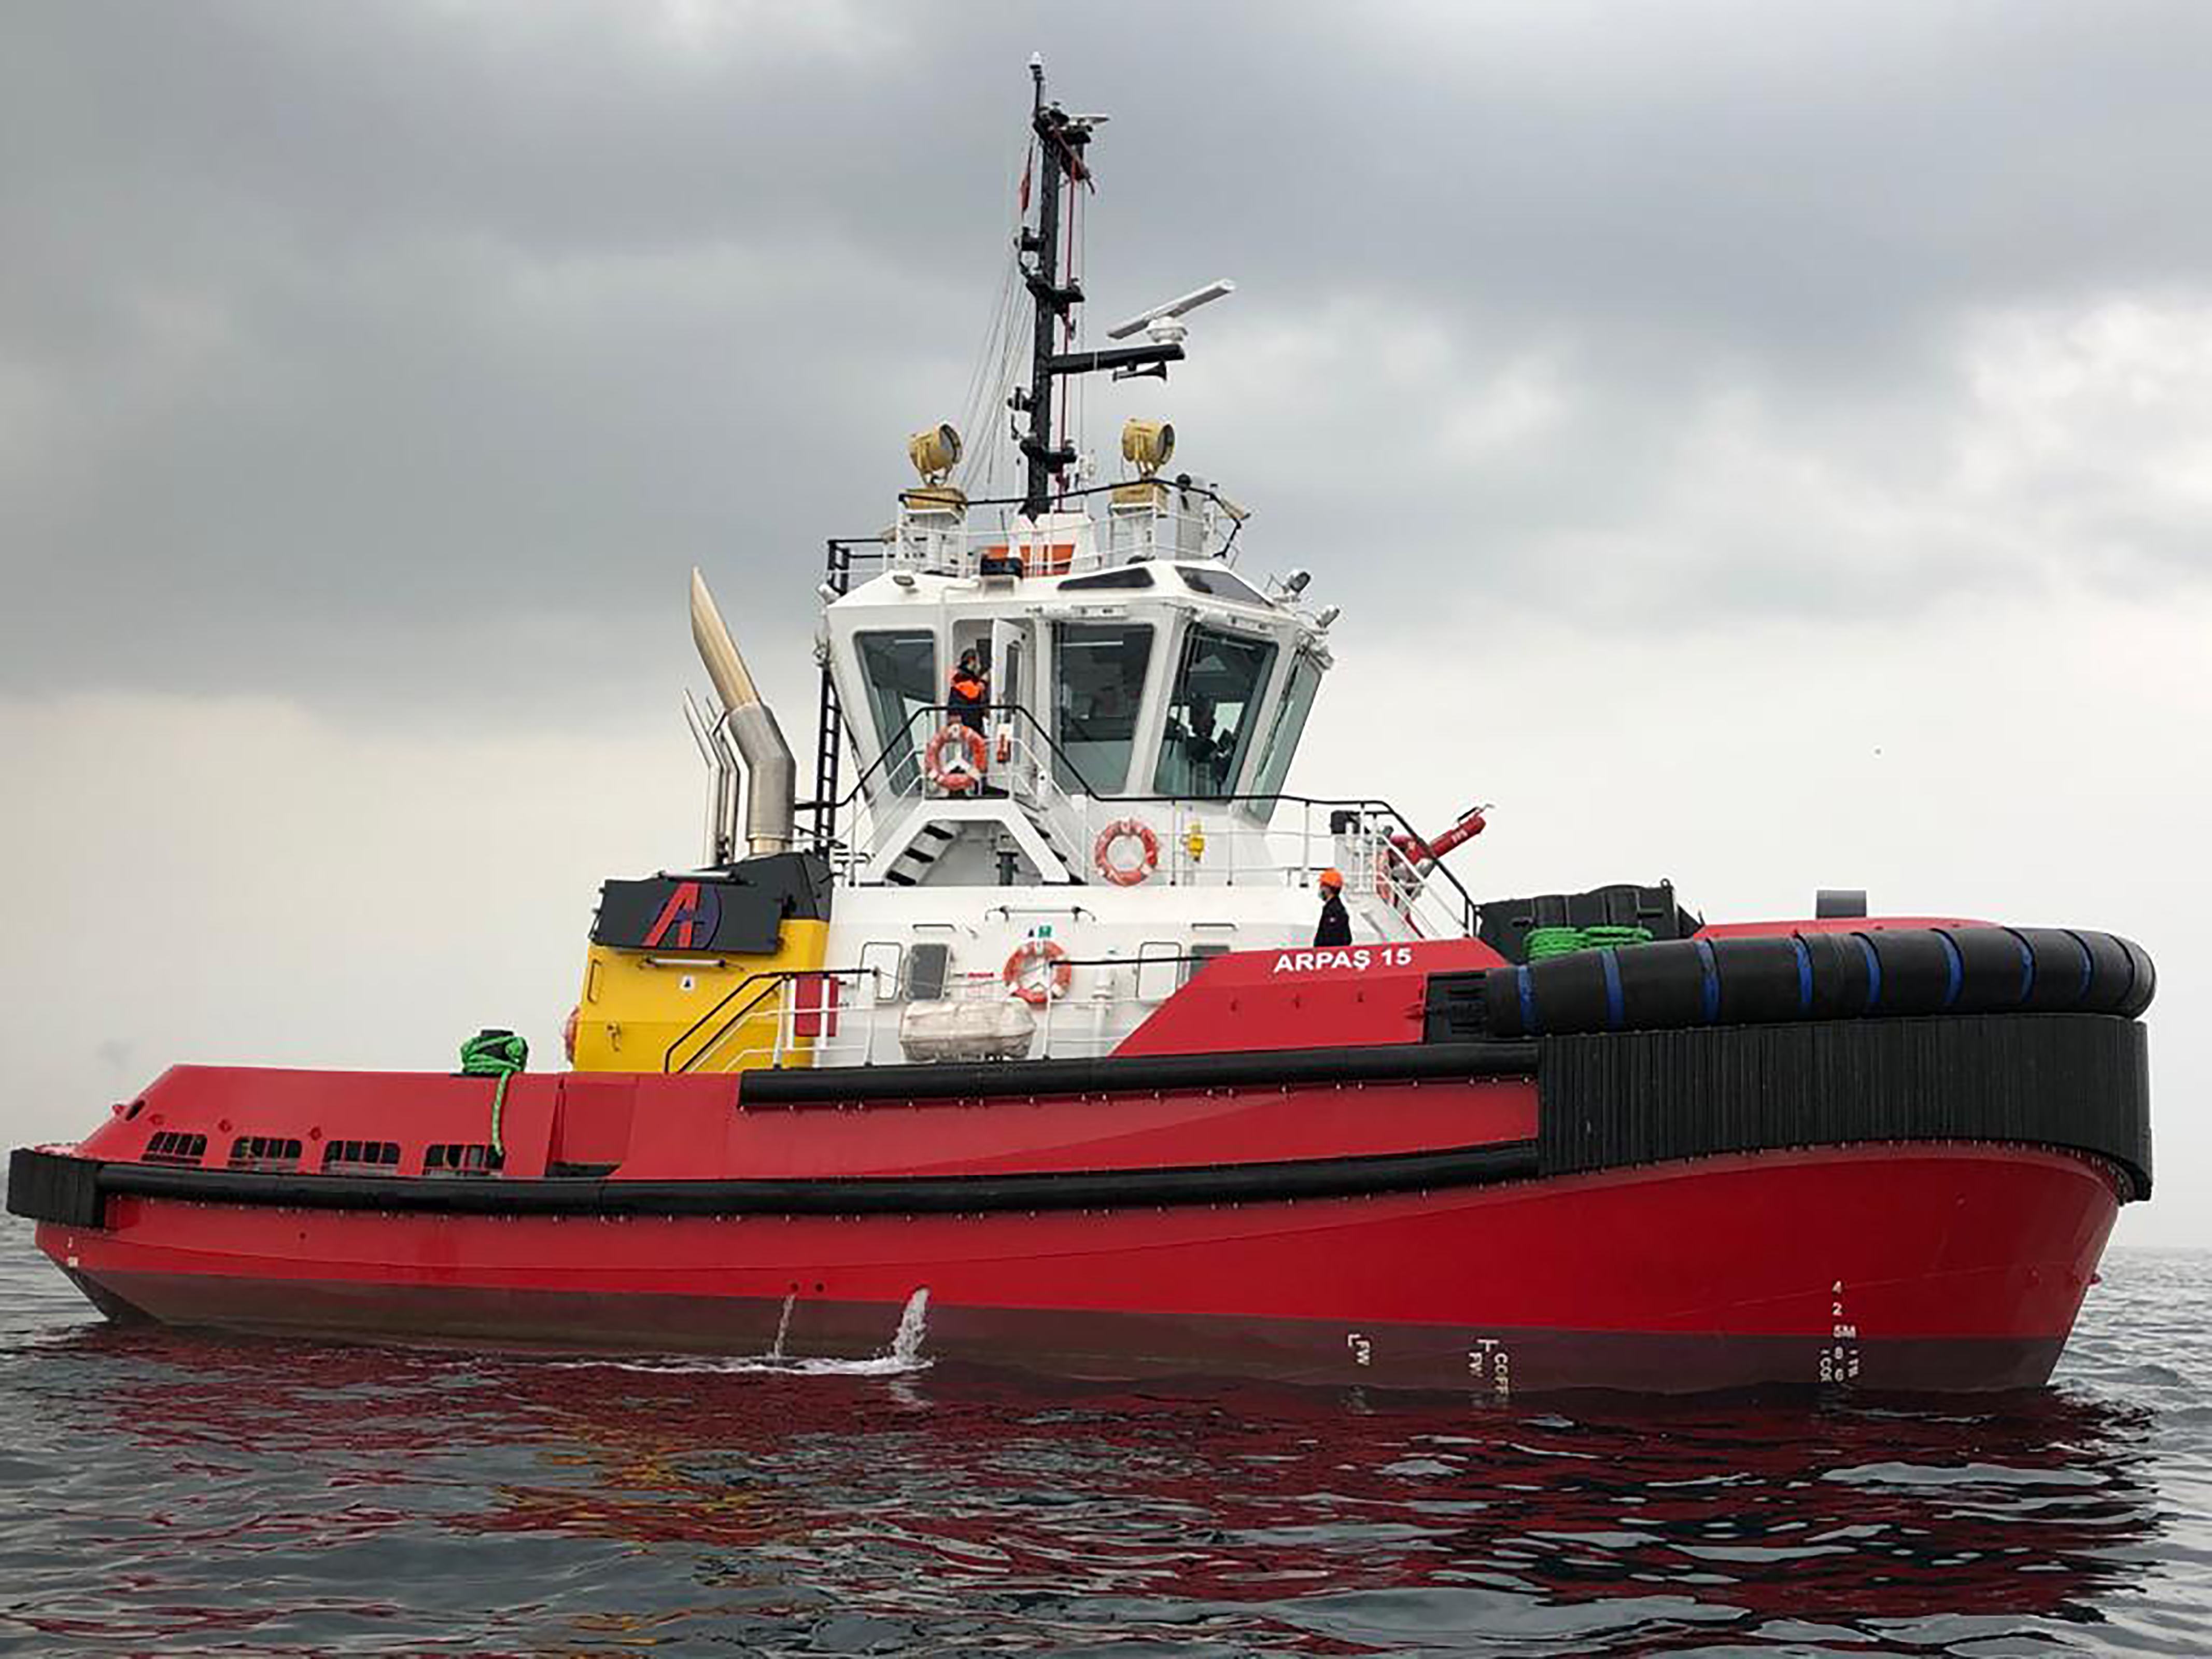 Turkish tugboat operator Arpas chooses Sanmar for new tugs of its fleet